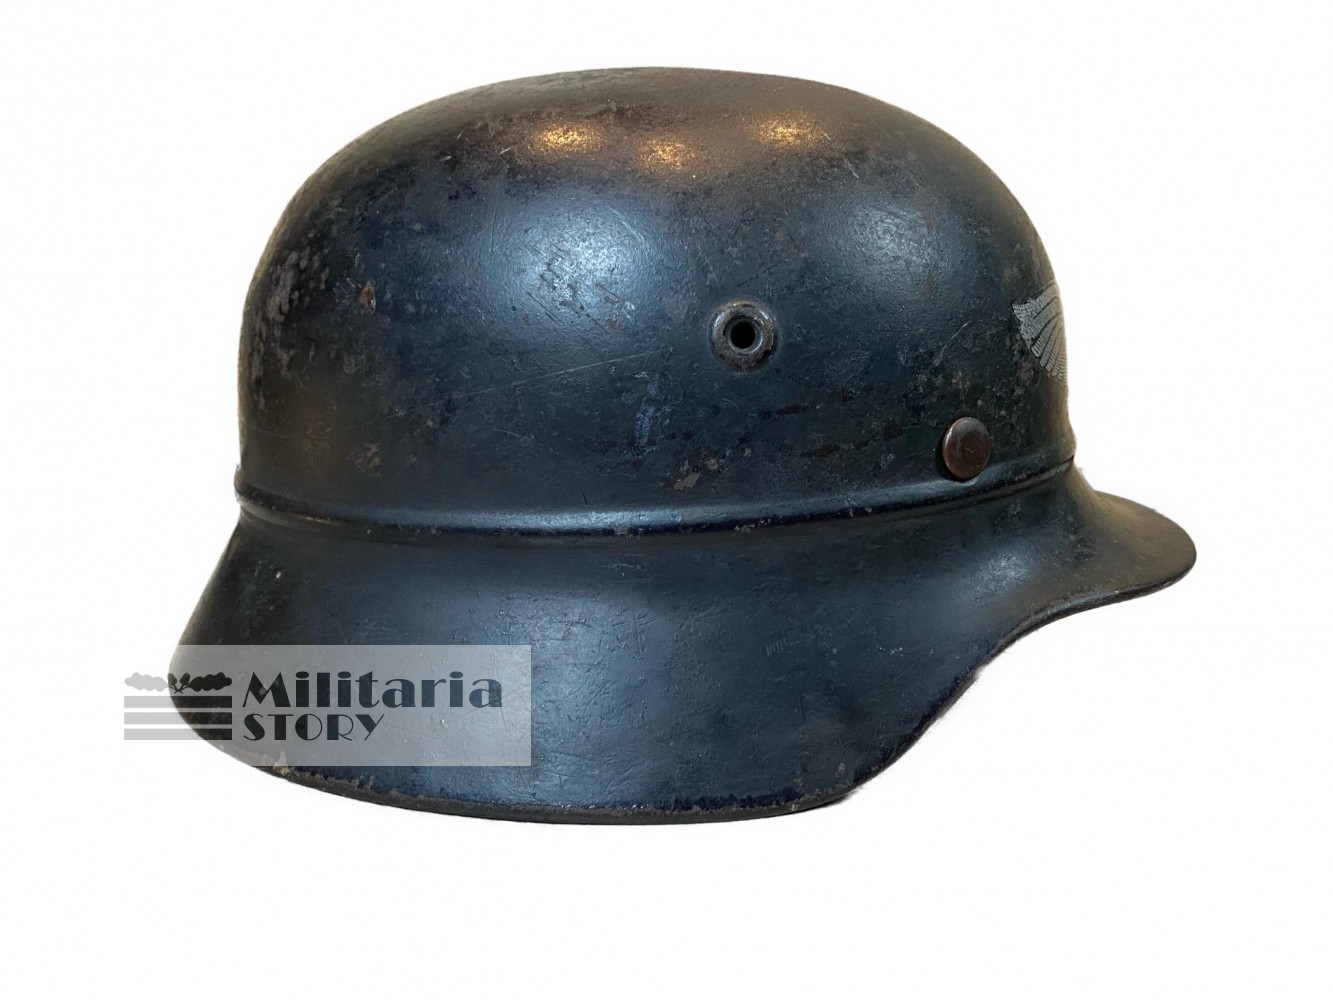 Luftschutz M40 helmet - Luftschutz M40 helmet: WW2 German Headgear